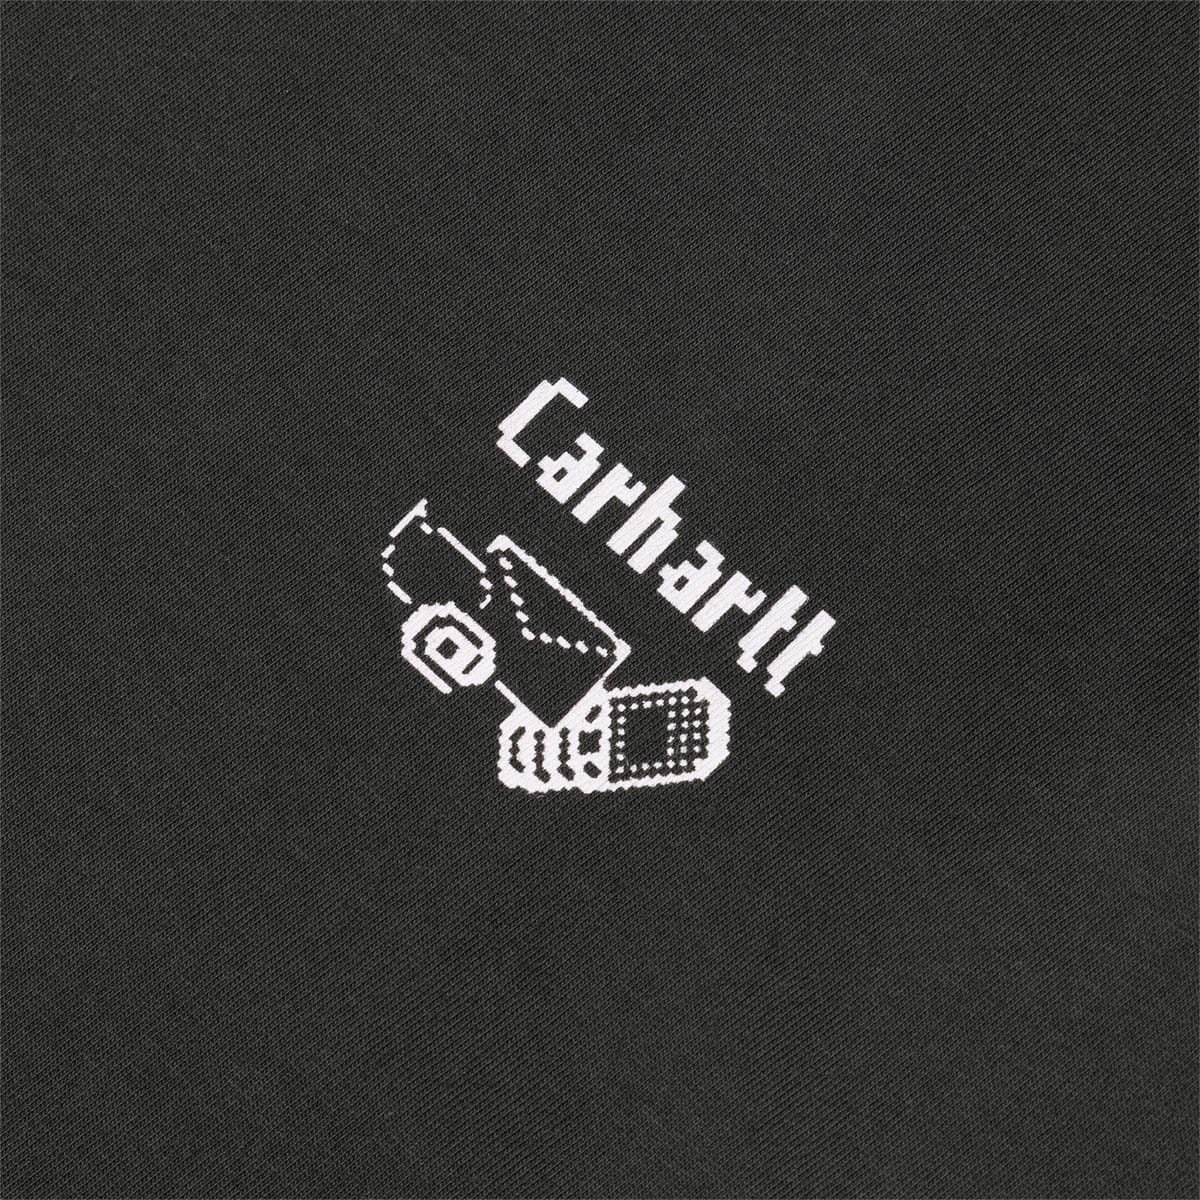 Carhartt W.I.P. T-Shirts SCREENSAVER T-SHIRT